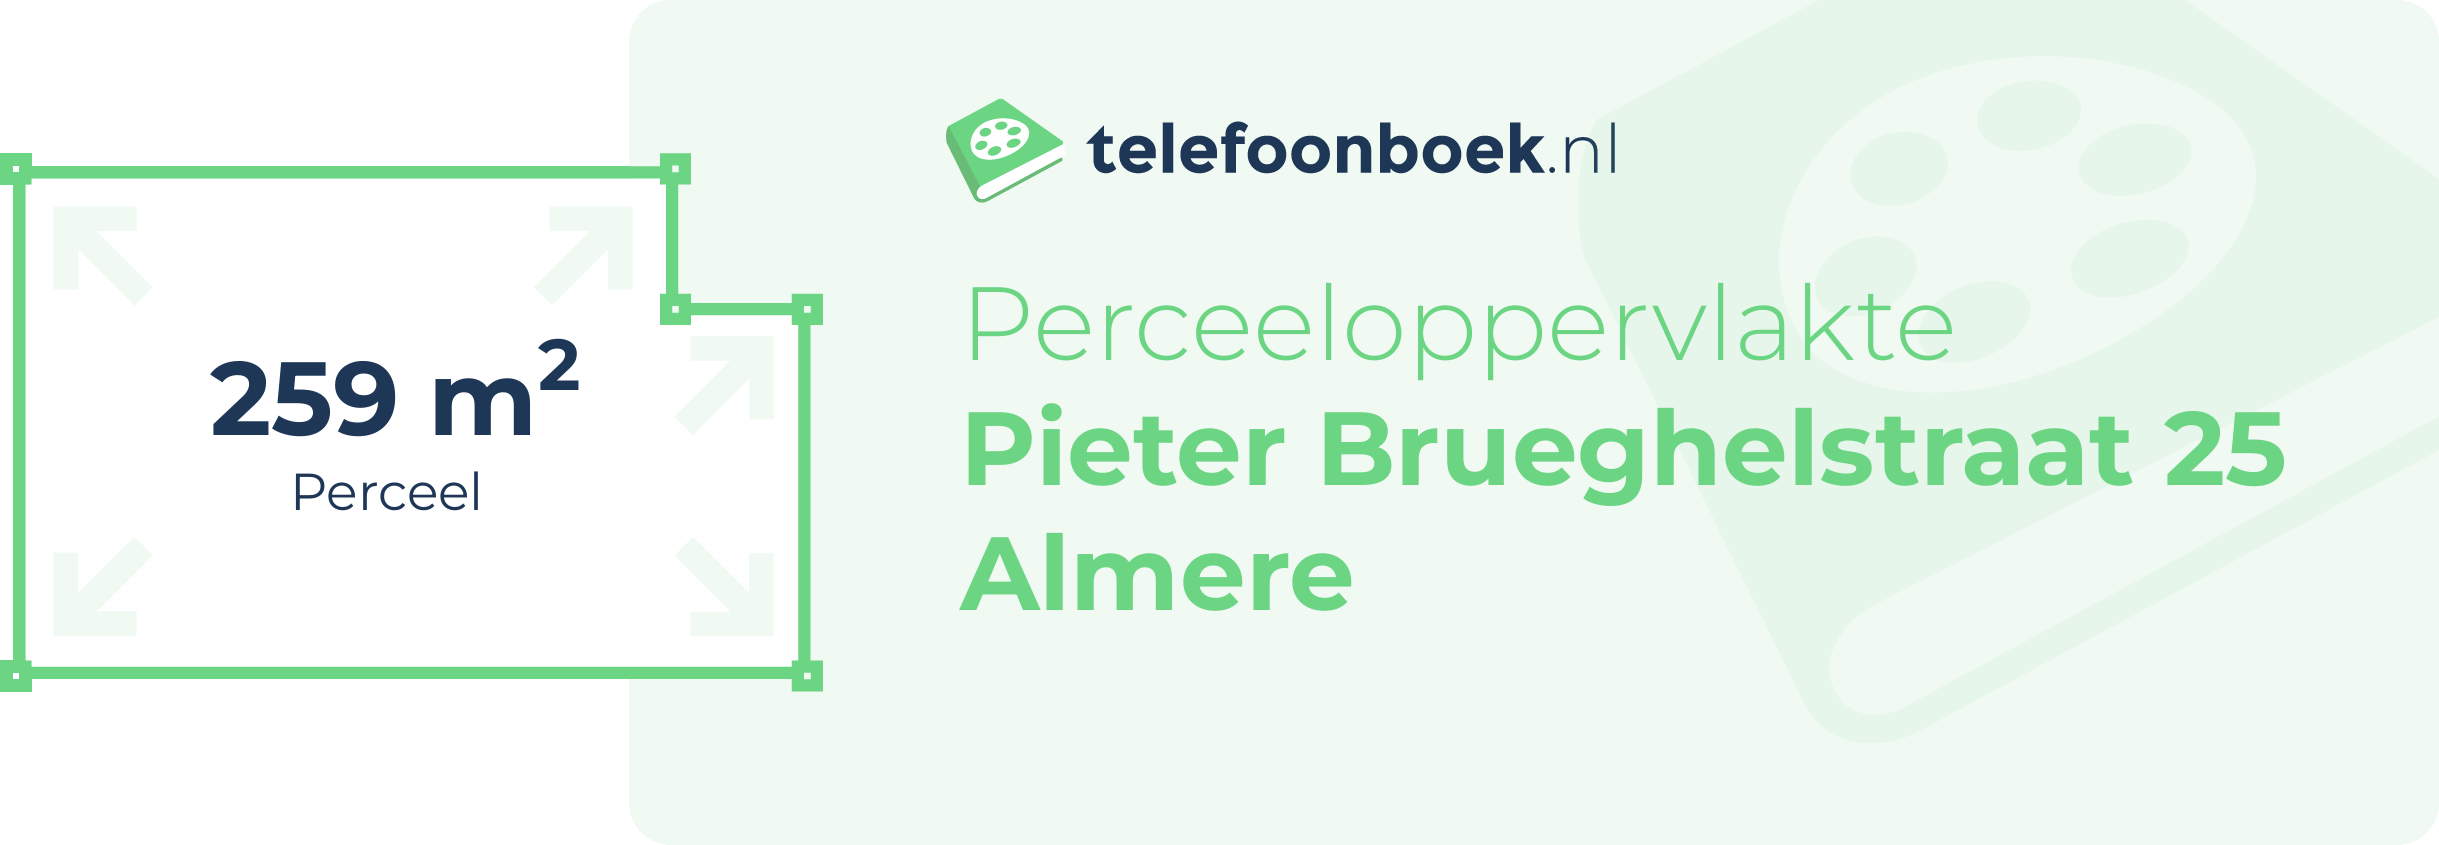 Perceeloppervlakte Pieter Brueghelstraat 25 Almere